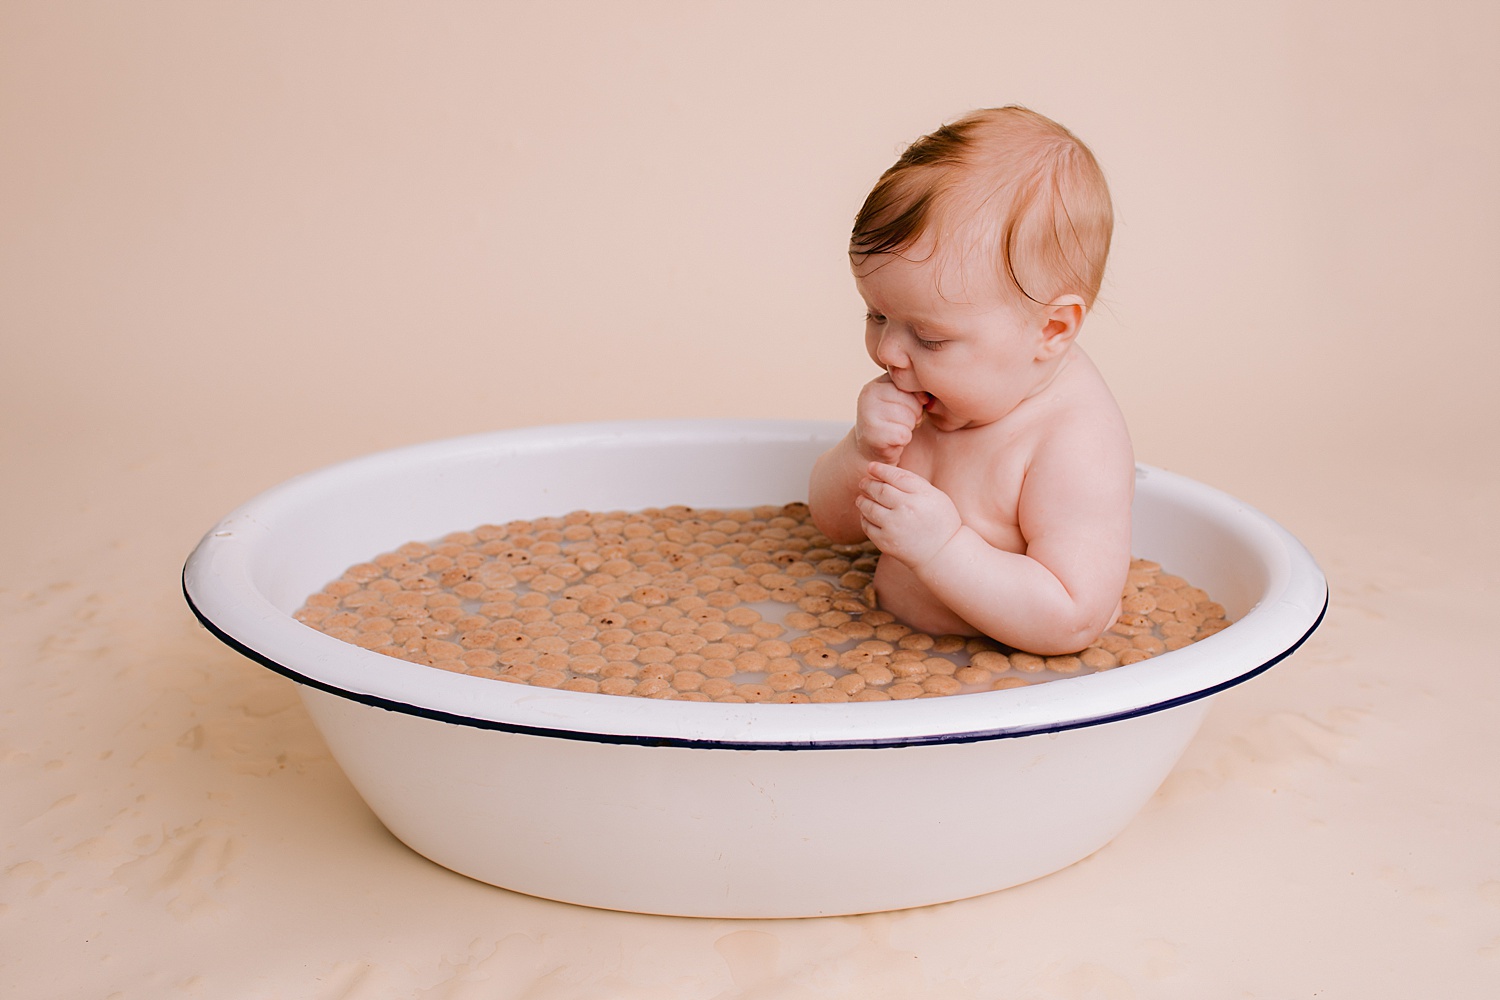 Berks County Pennsylvania children's studio portrait photographer milk bath baby